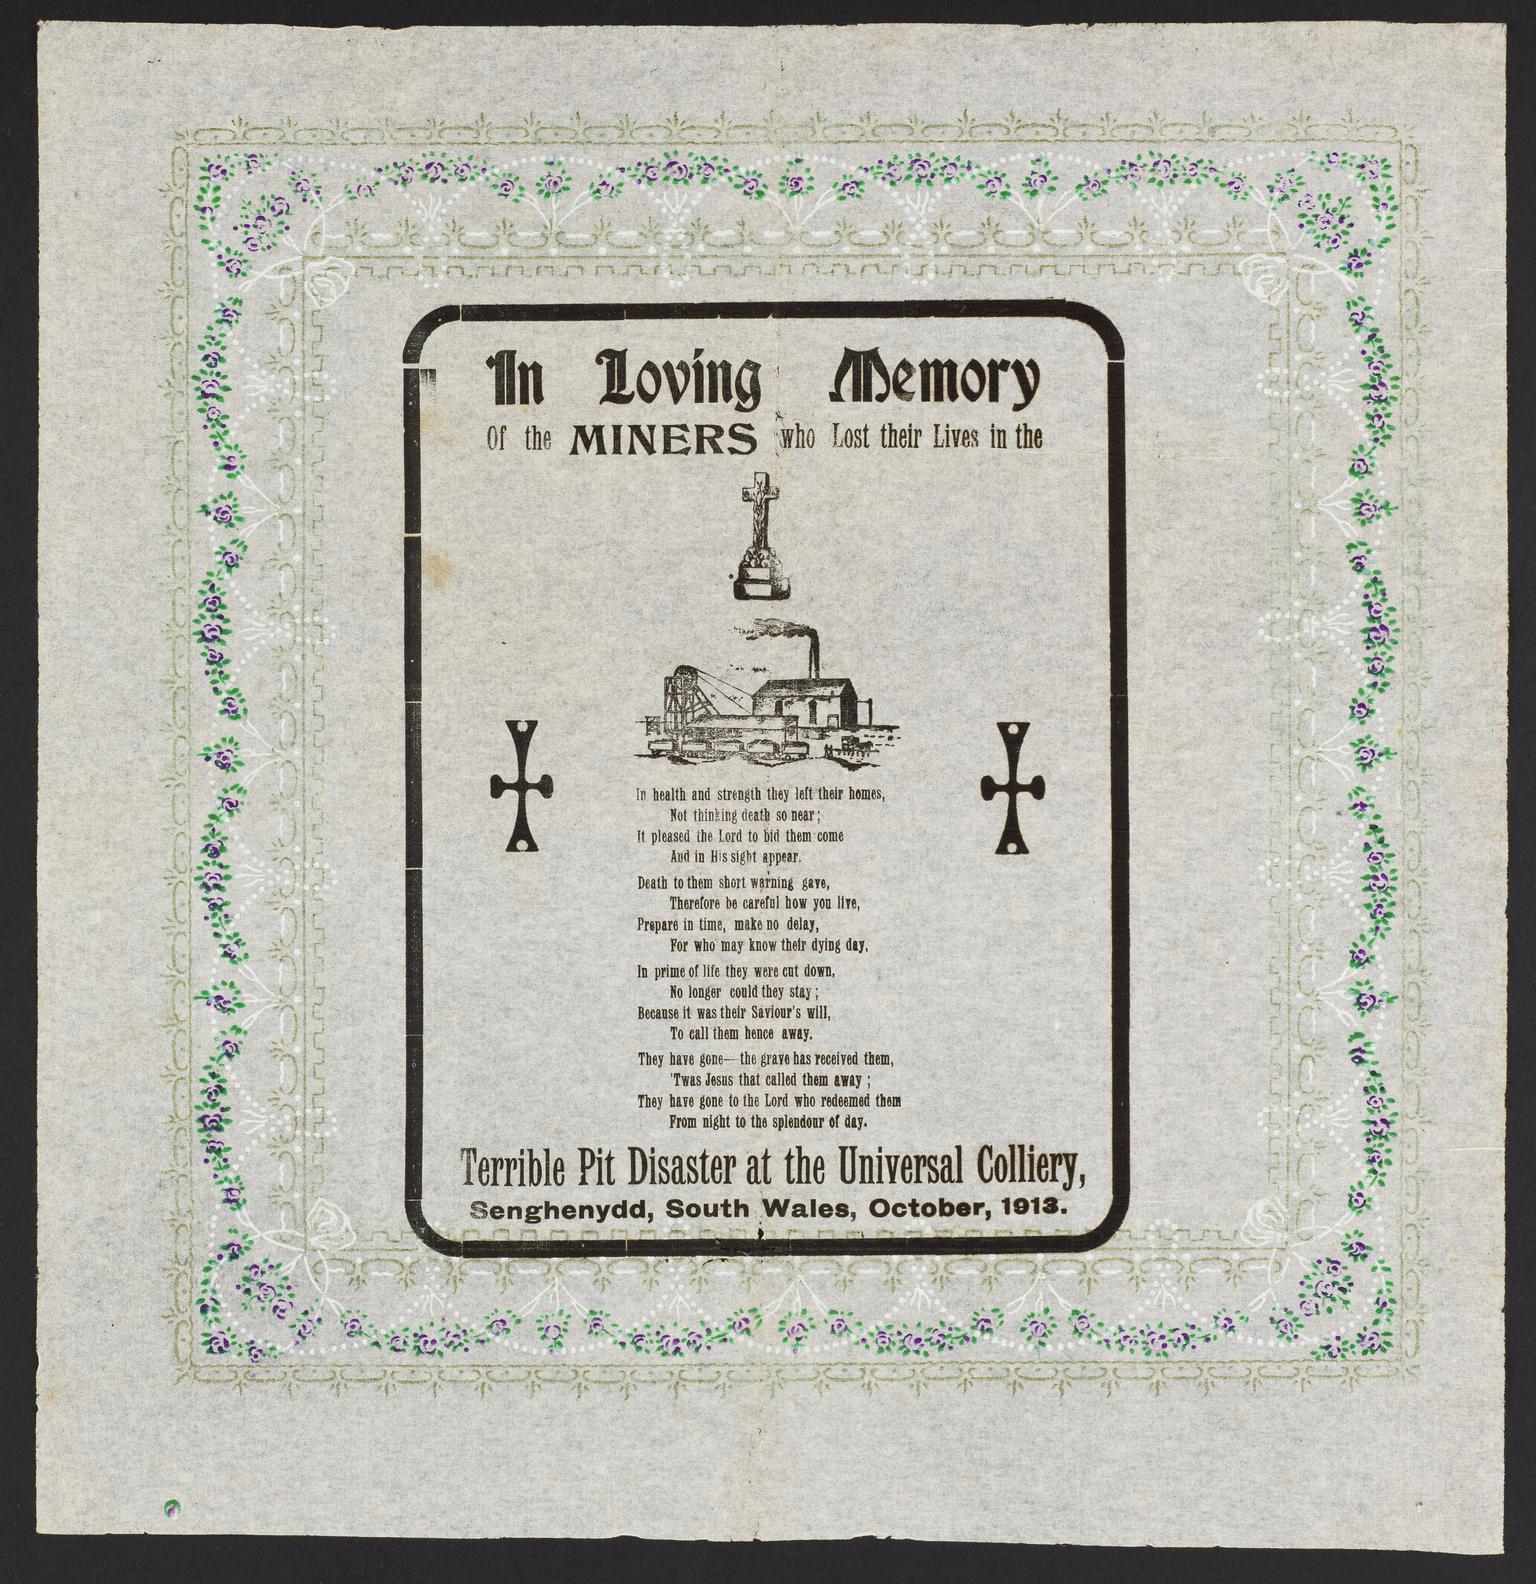 Universal Colliery, Senghenydd, memorial poem printed on serviette